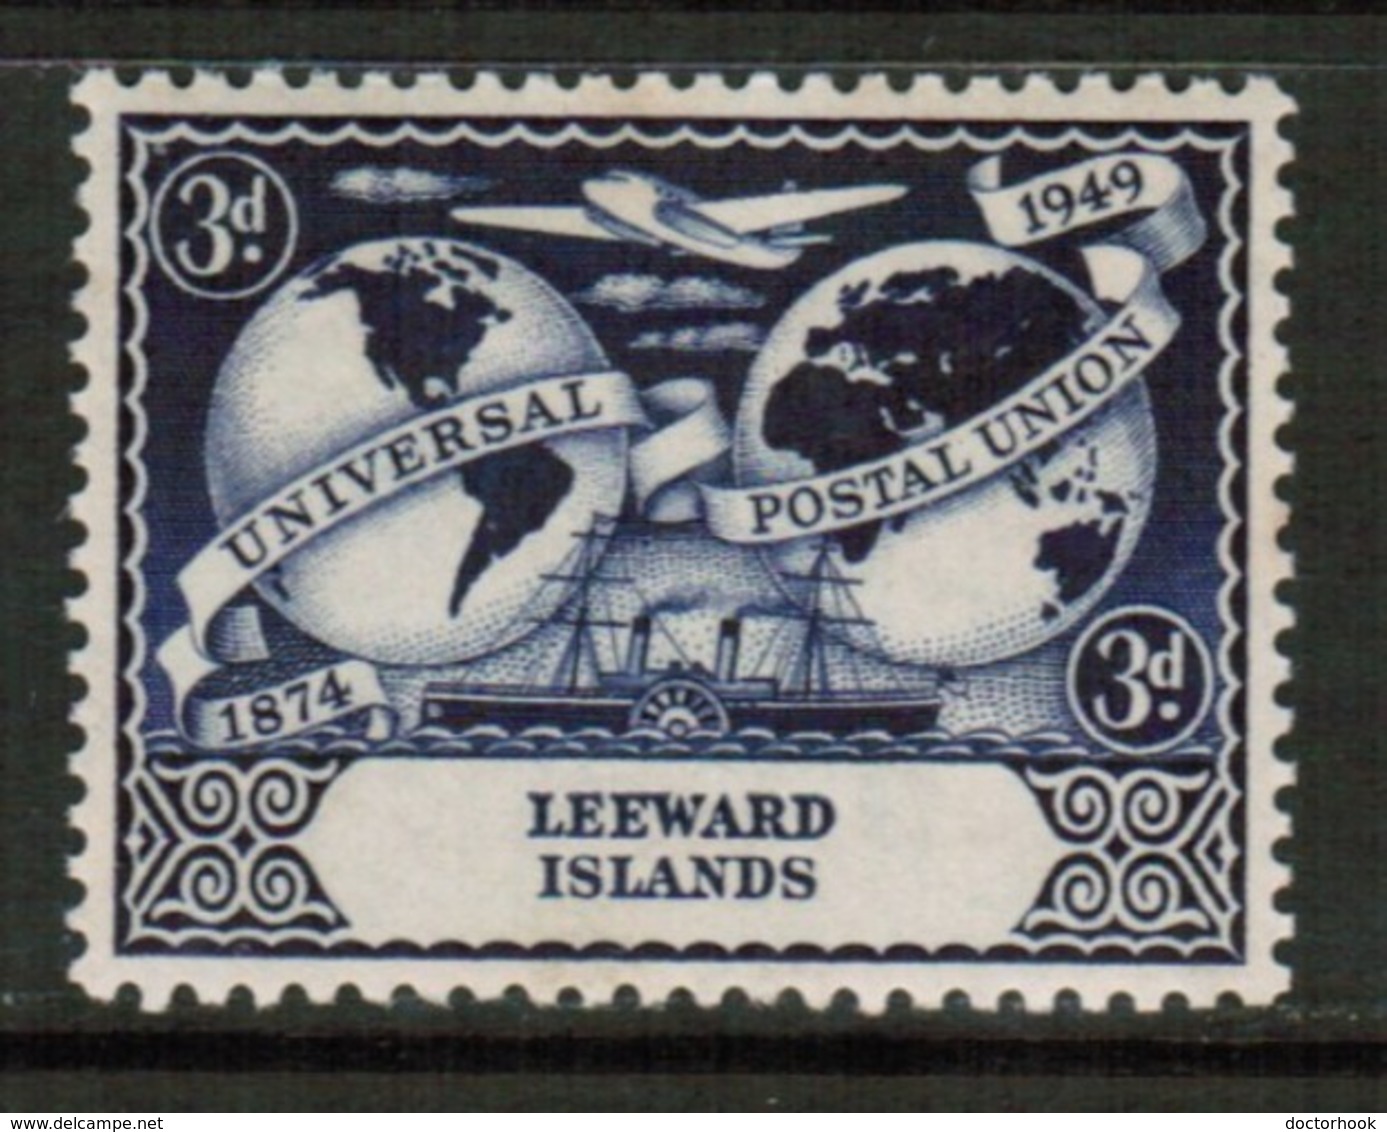 LEEWARD ISLANDS  Scott # 127* VF MINT LH (Stamp Scan # 440) - Leeward  Islands